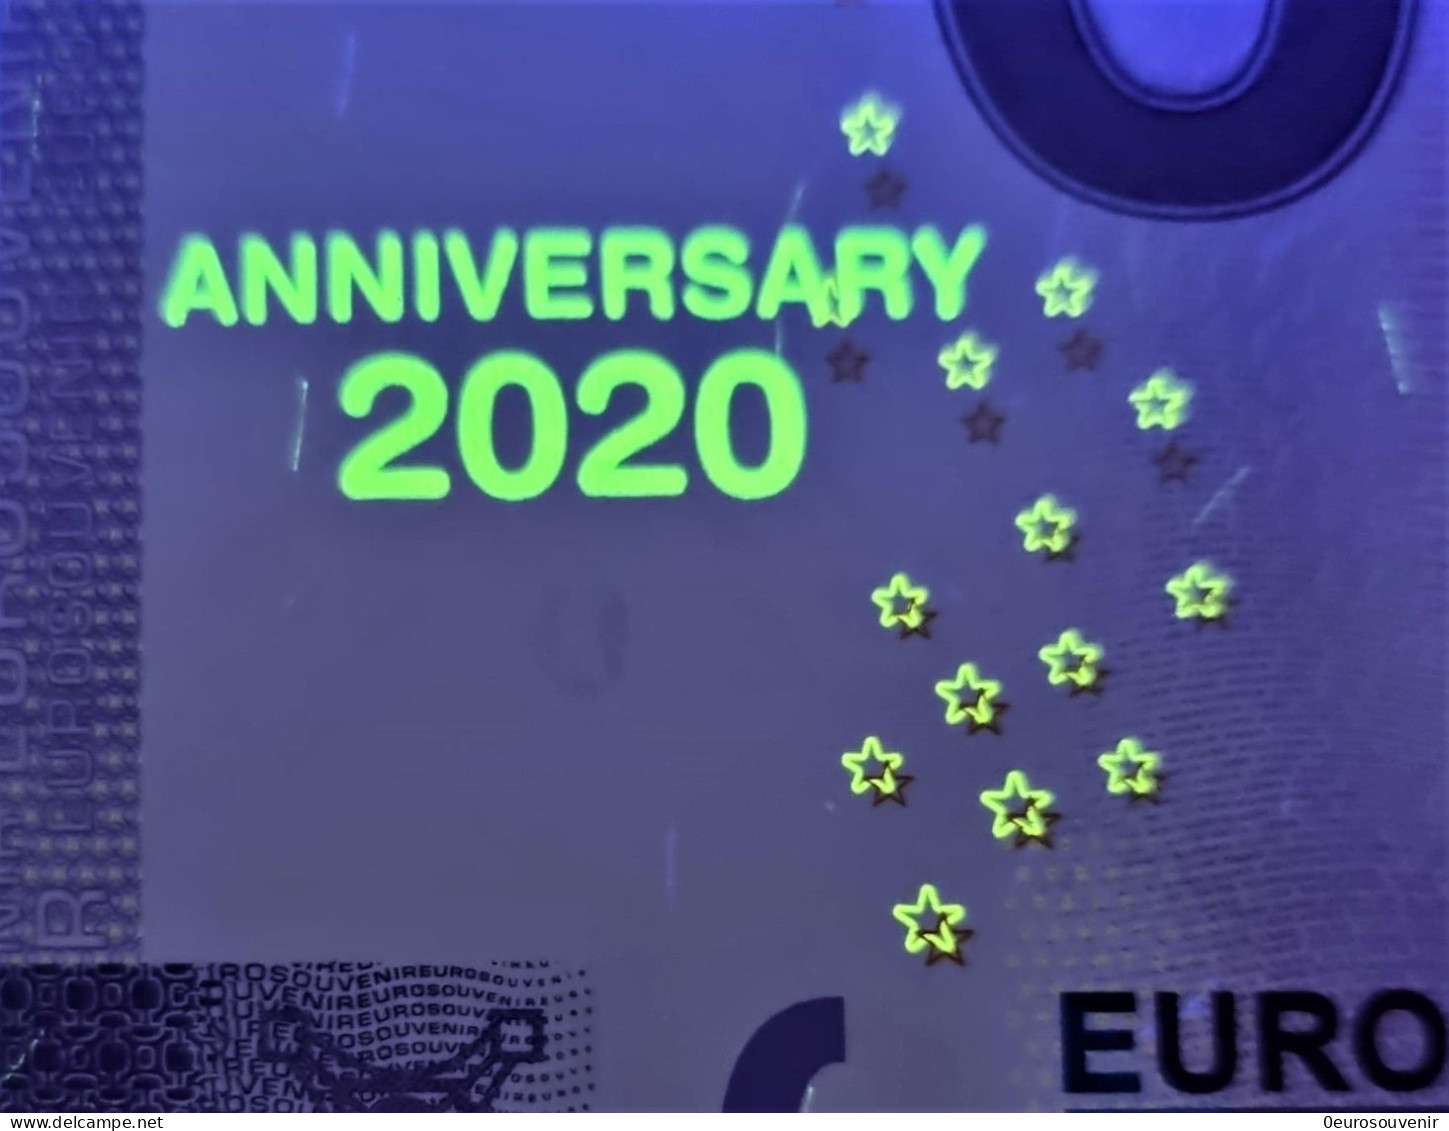 0-Euro TEAP 2020-1 RMS TITANIC - IRLAND Set NORMAL +ANNIVERSARY - Privatentwürfe